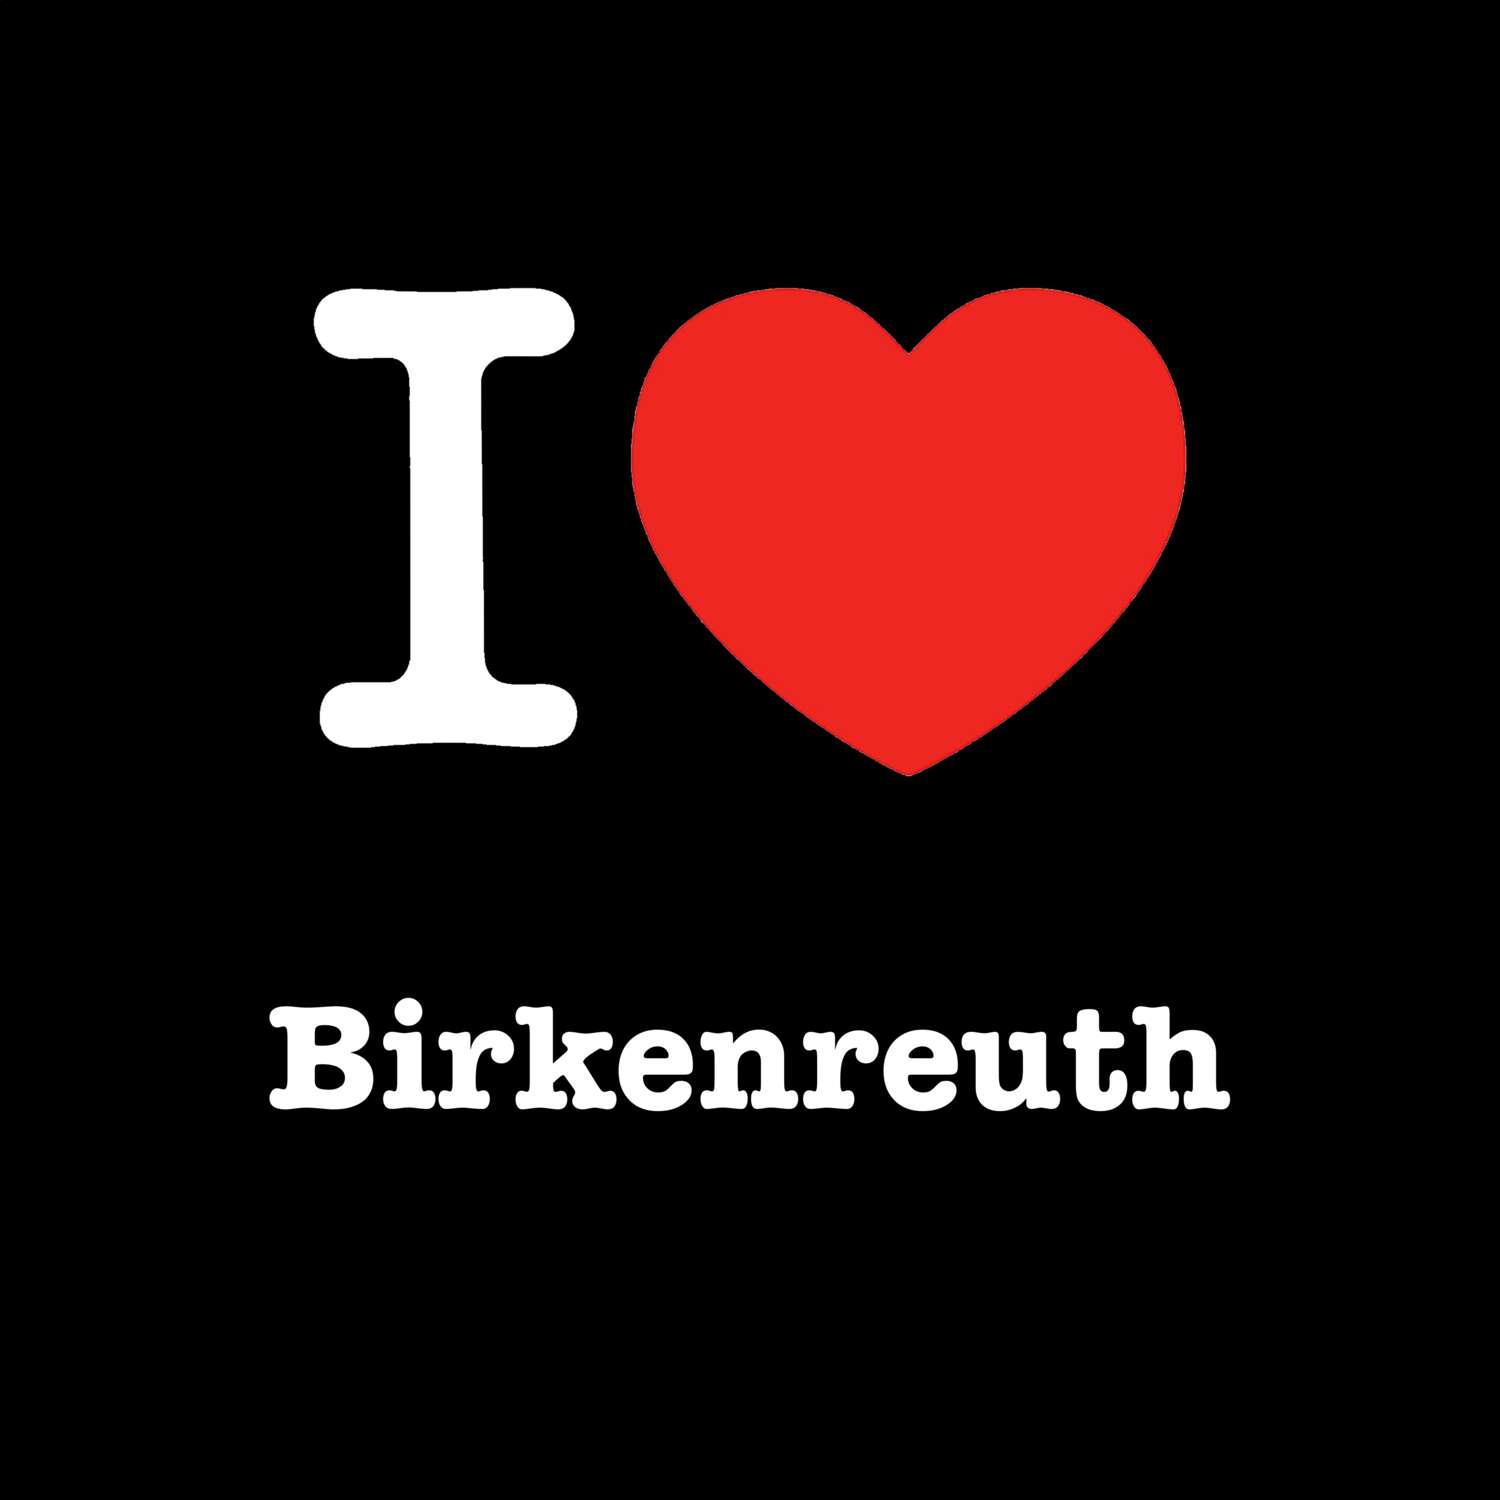 Birkenreuth T-Shirt »I love«